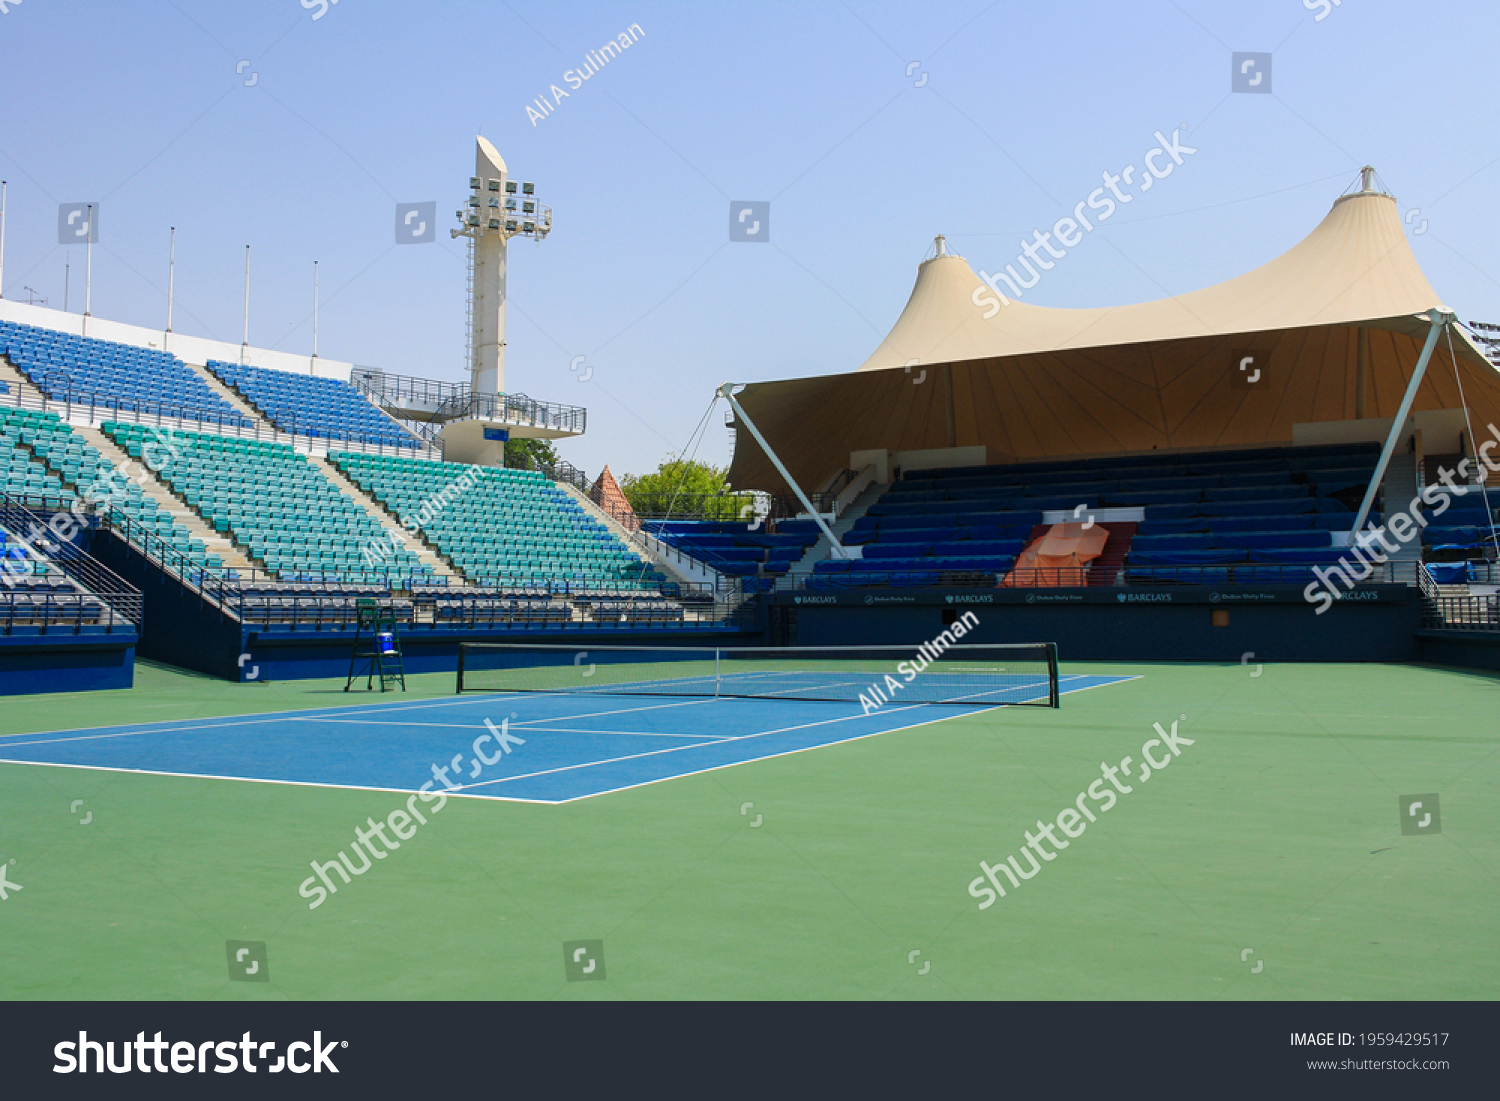 Dubai Tennis Stadium Tennis Stadium Has Stock Photo 1959429517